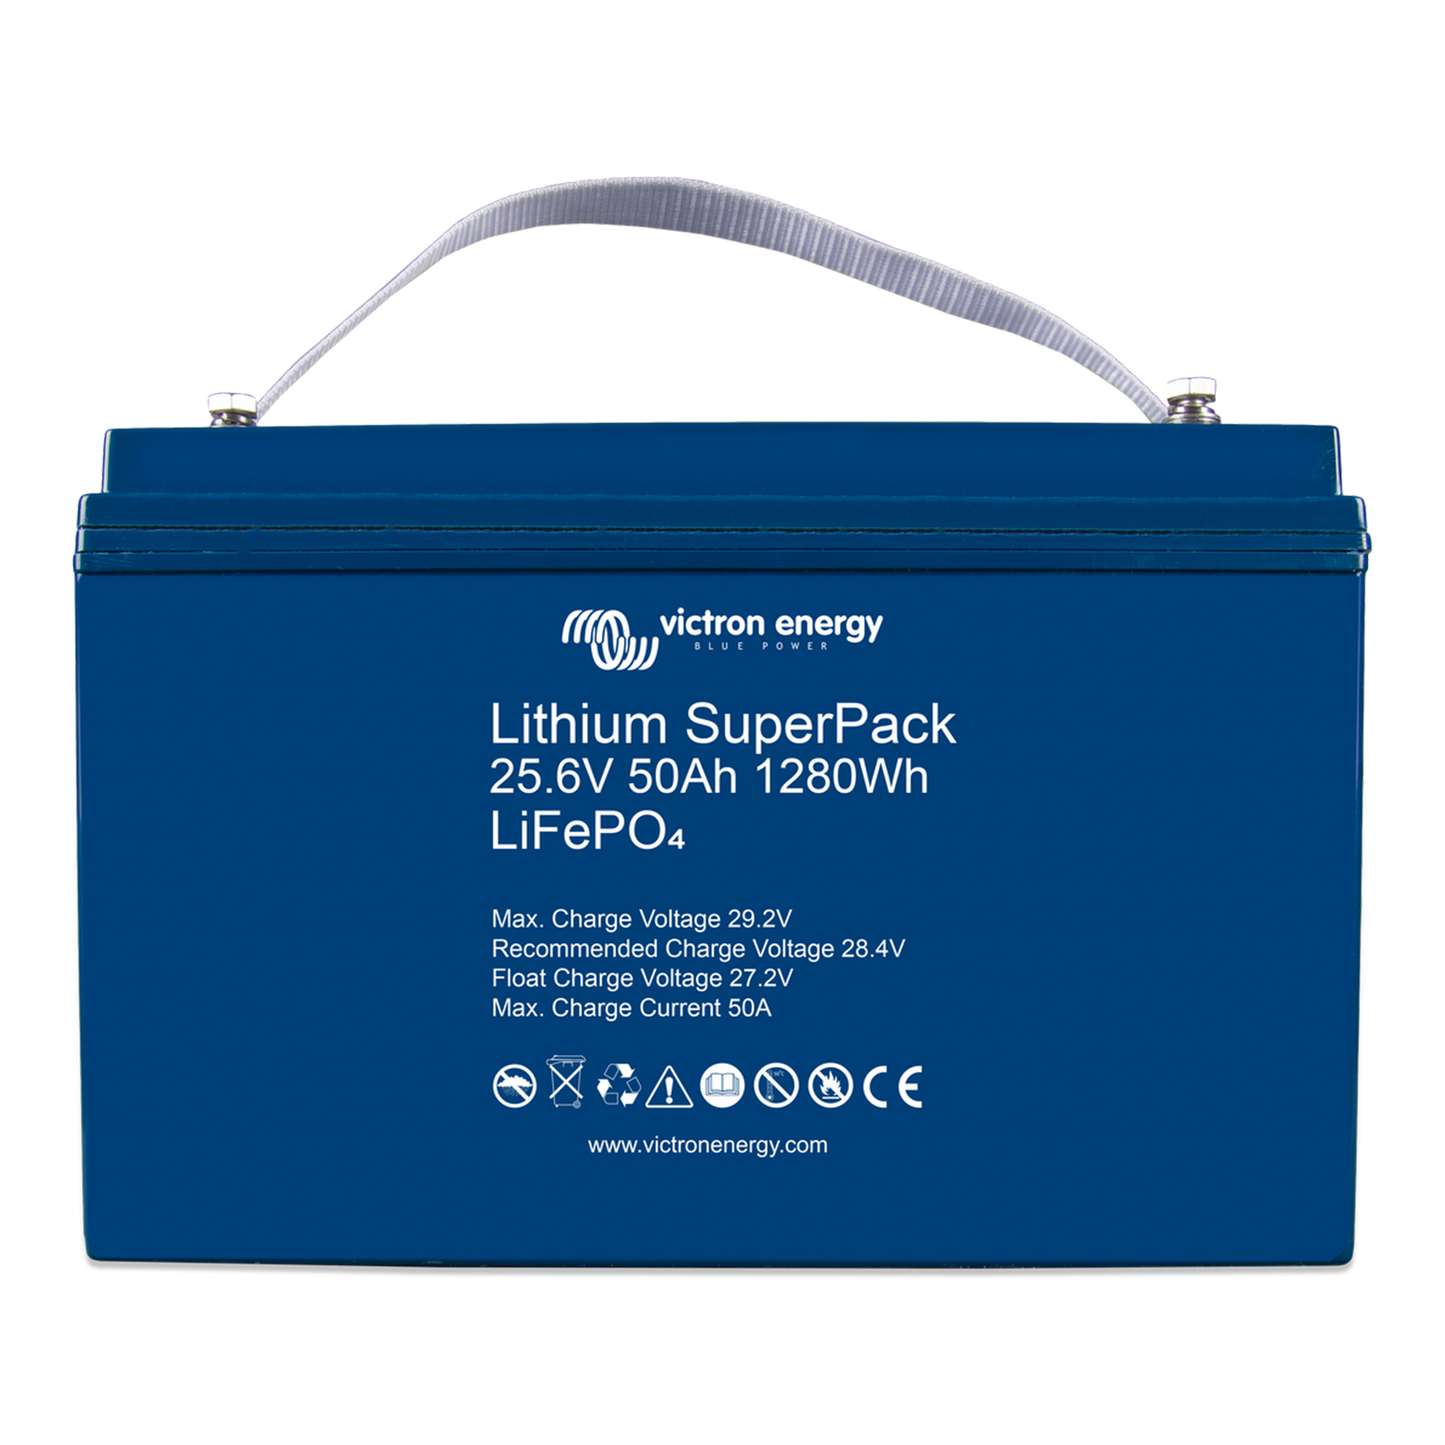 24V 50AH Victron Lithium SuperPack battery